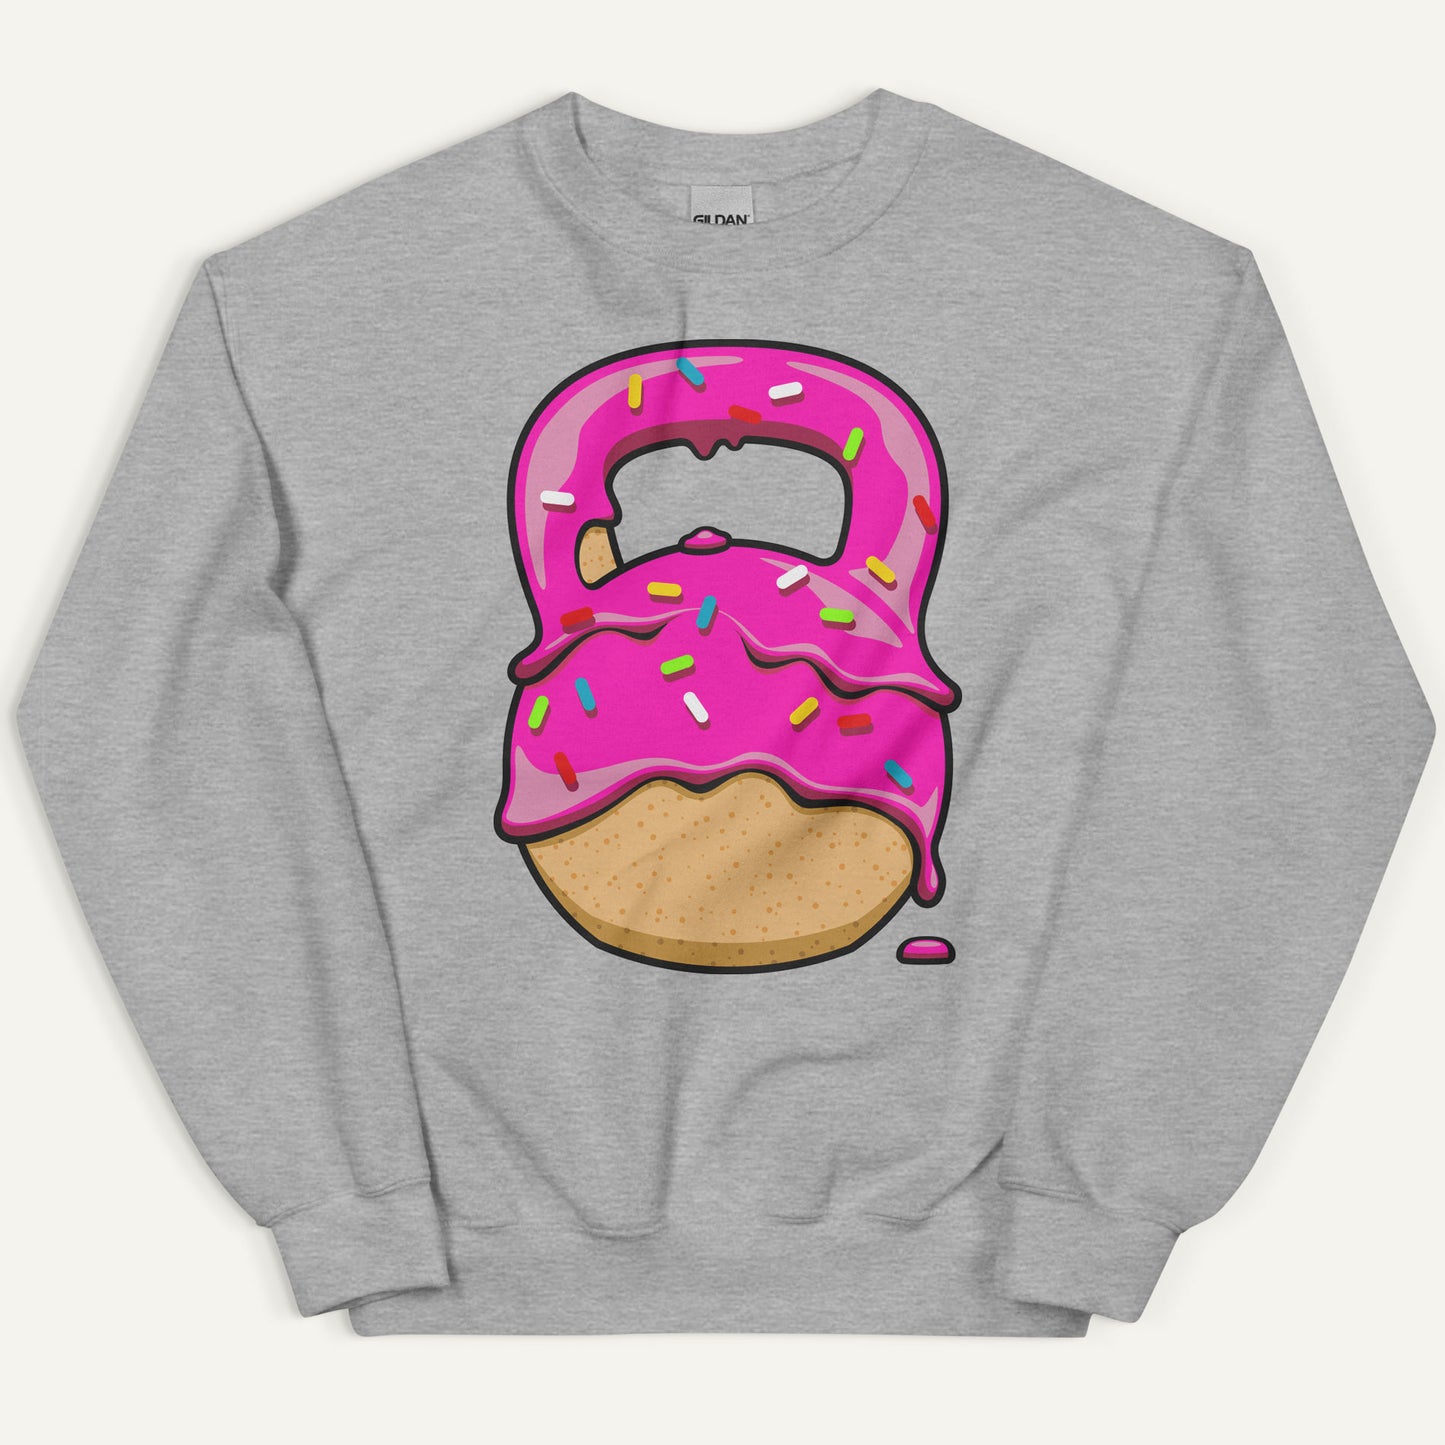 Pink-Glazed Donut With Sprinkles Kettlebell Design Sweatshirt